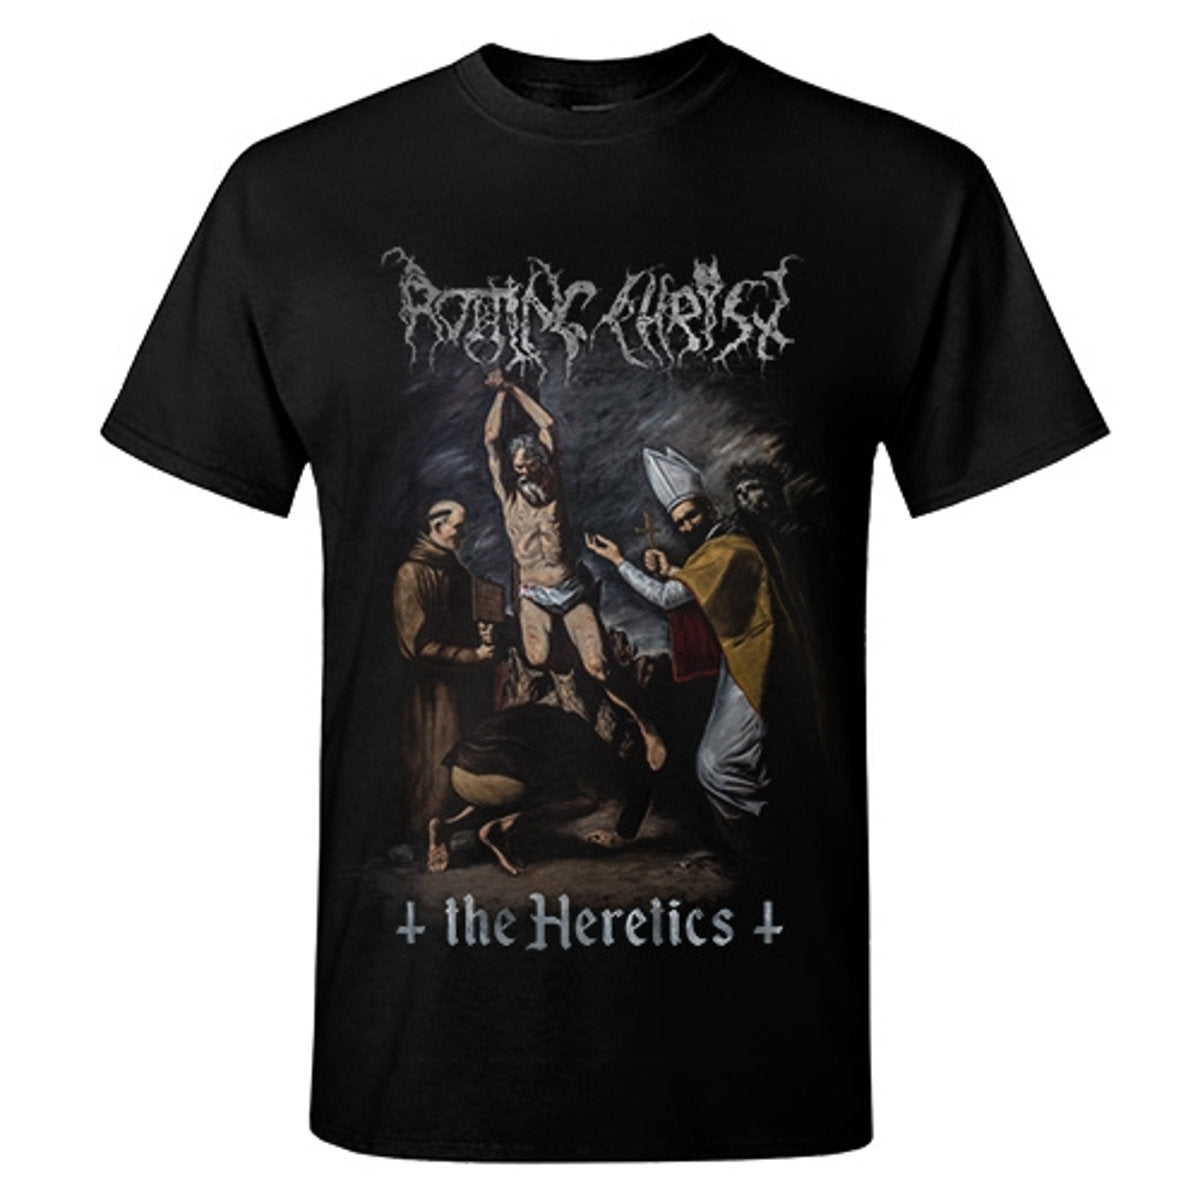 Rotting Christ "The Heretics" T shirt